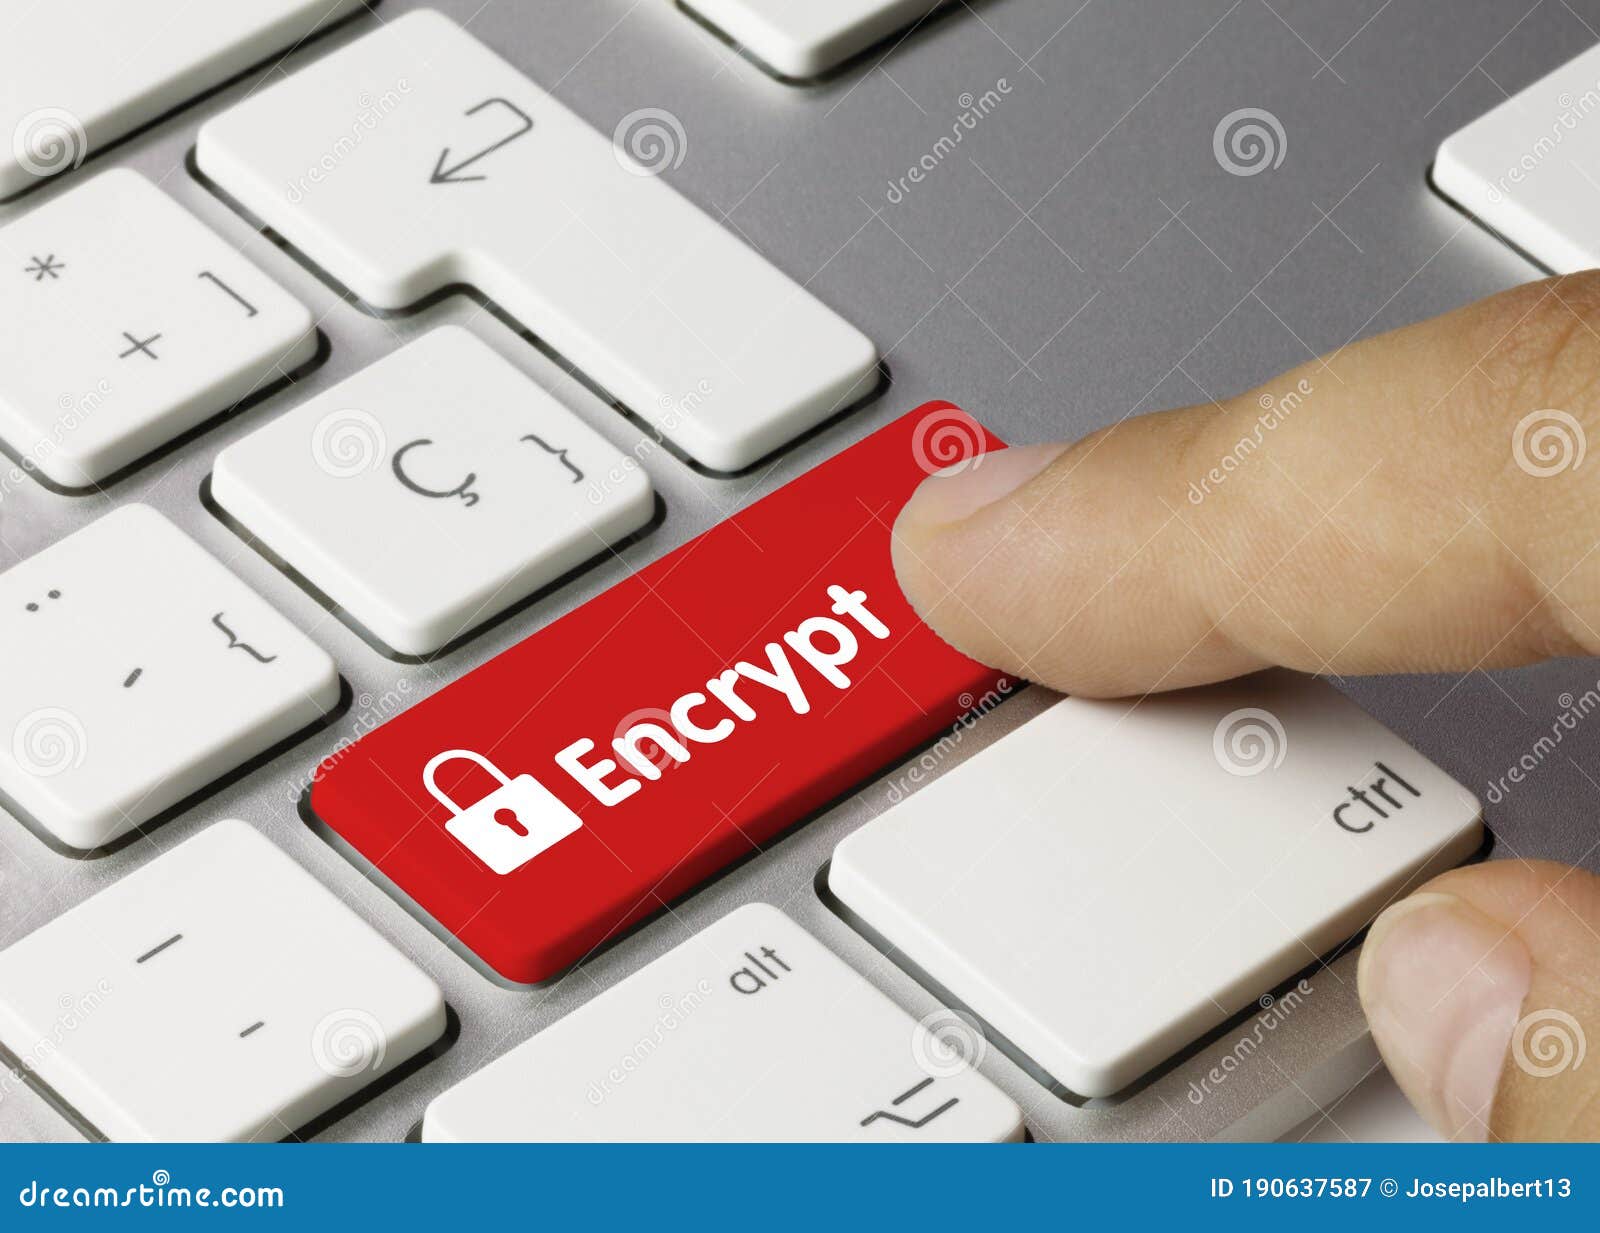 encrypt - inscription on red keyboard key